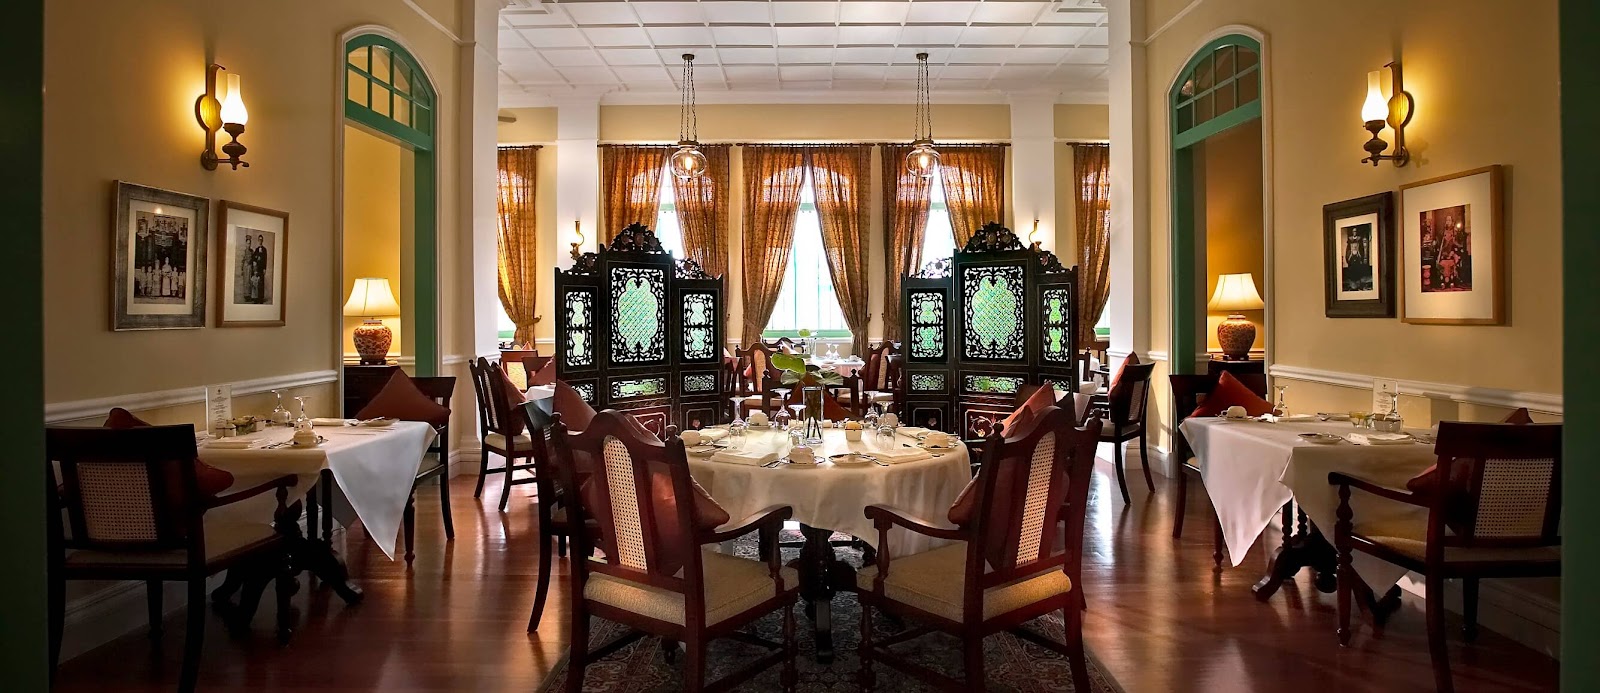 The Mansion Restaurant interior